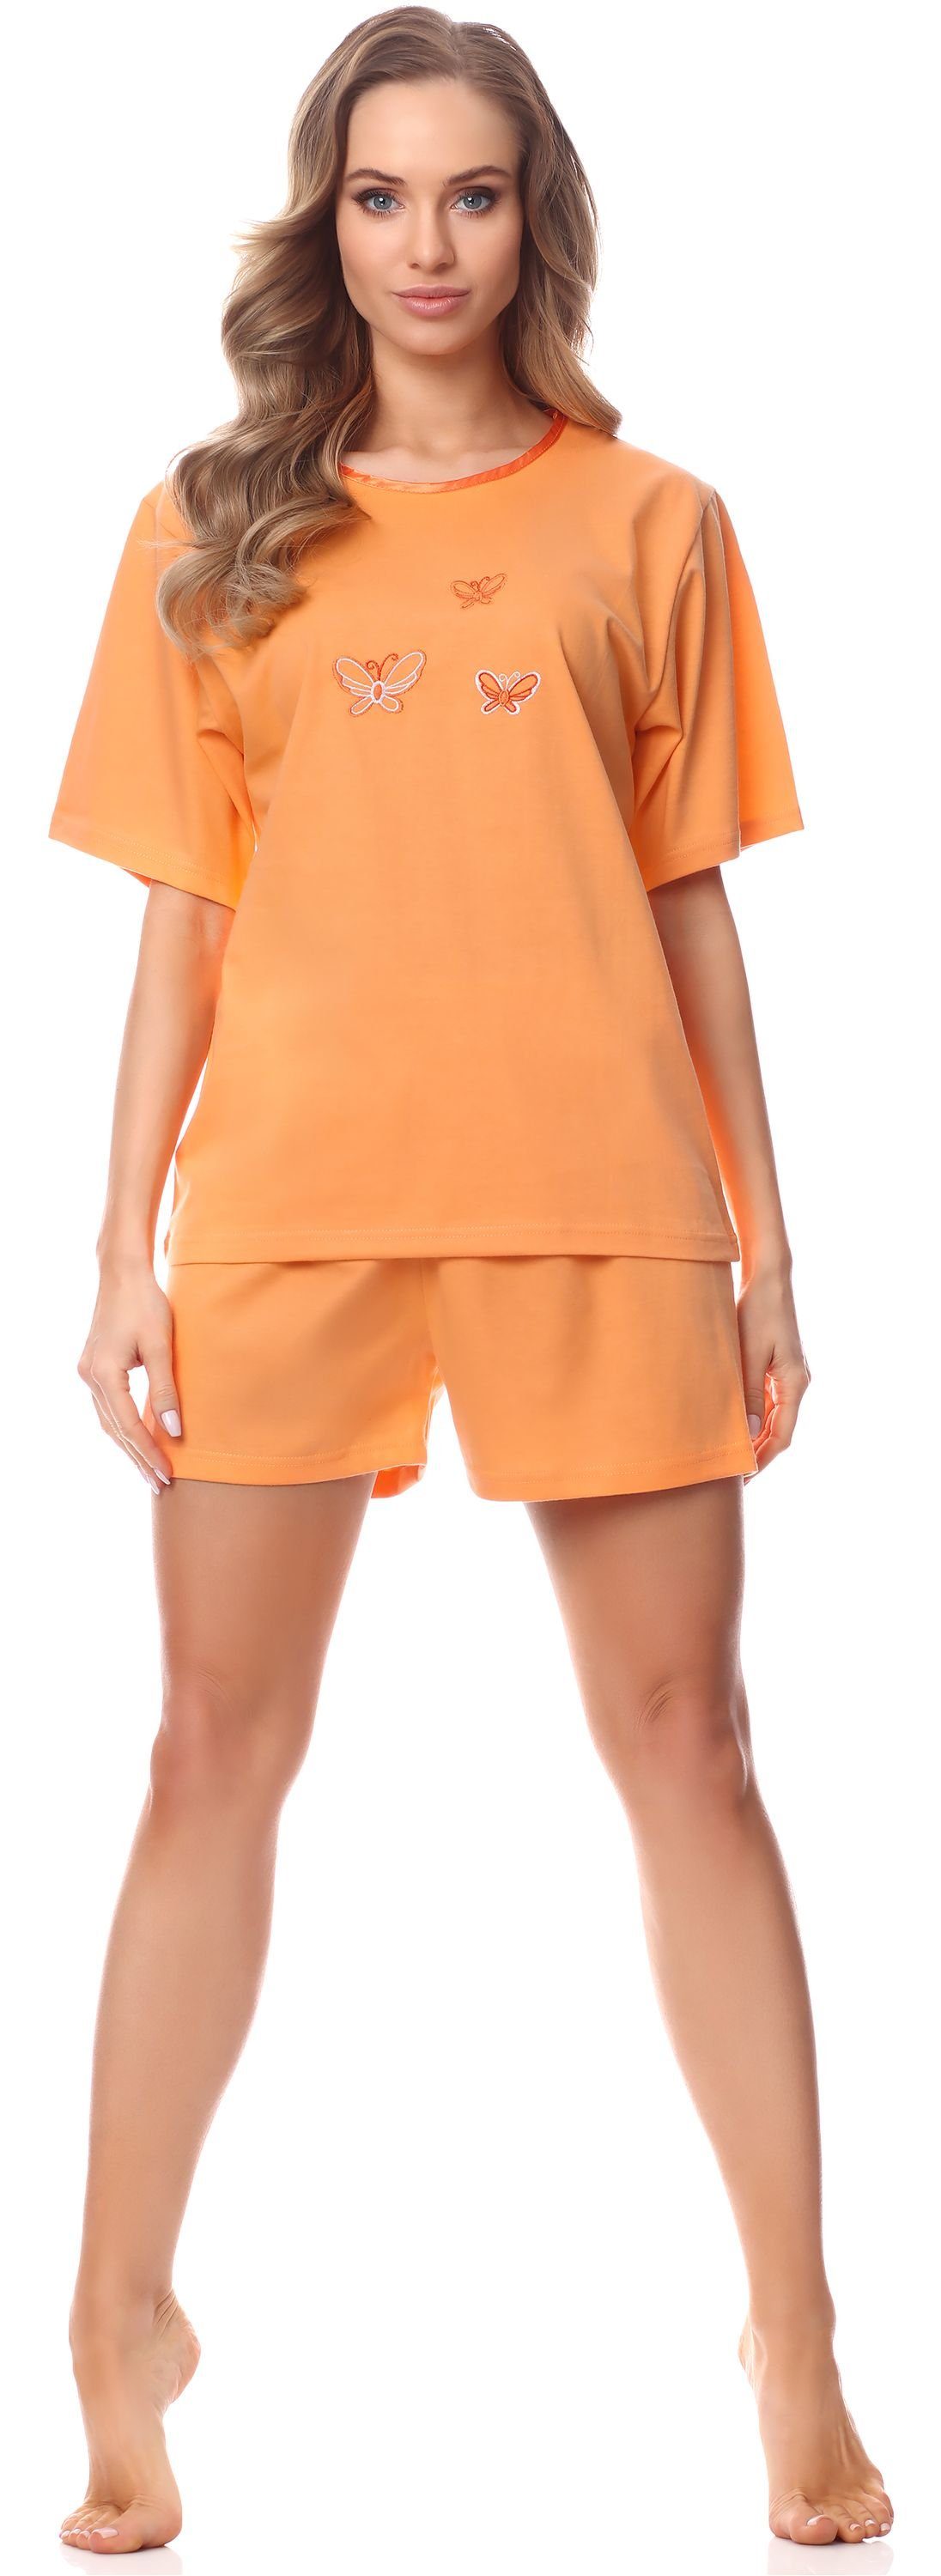 Damen (Kurzarm) Style Kurzarm Schlafanzug 91LW1 Orange Schlafanzug Merry